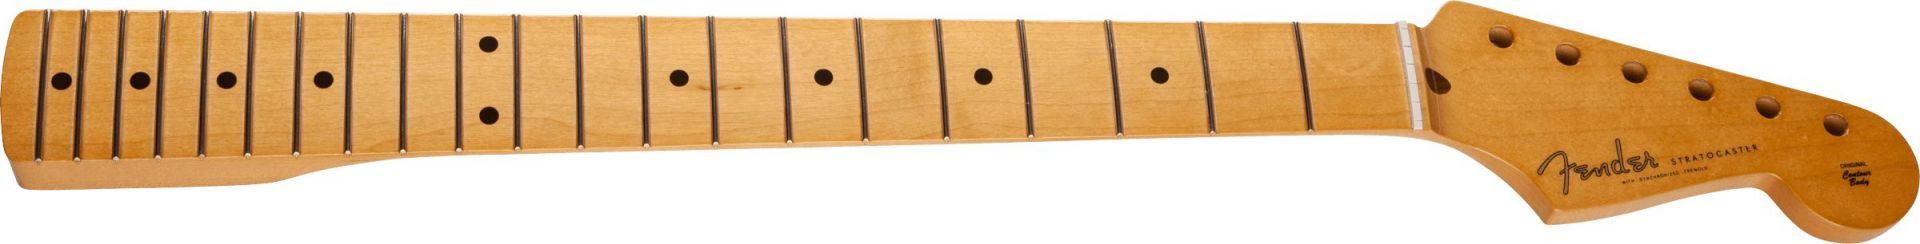 Fender Classic Series 50s Stratocaster Soft V Neck 21 Vintage Frets - Maple Natural